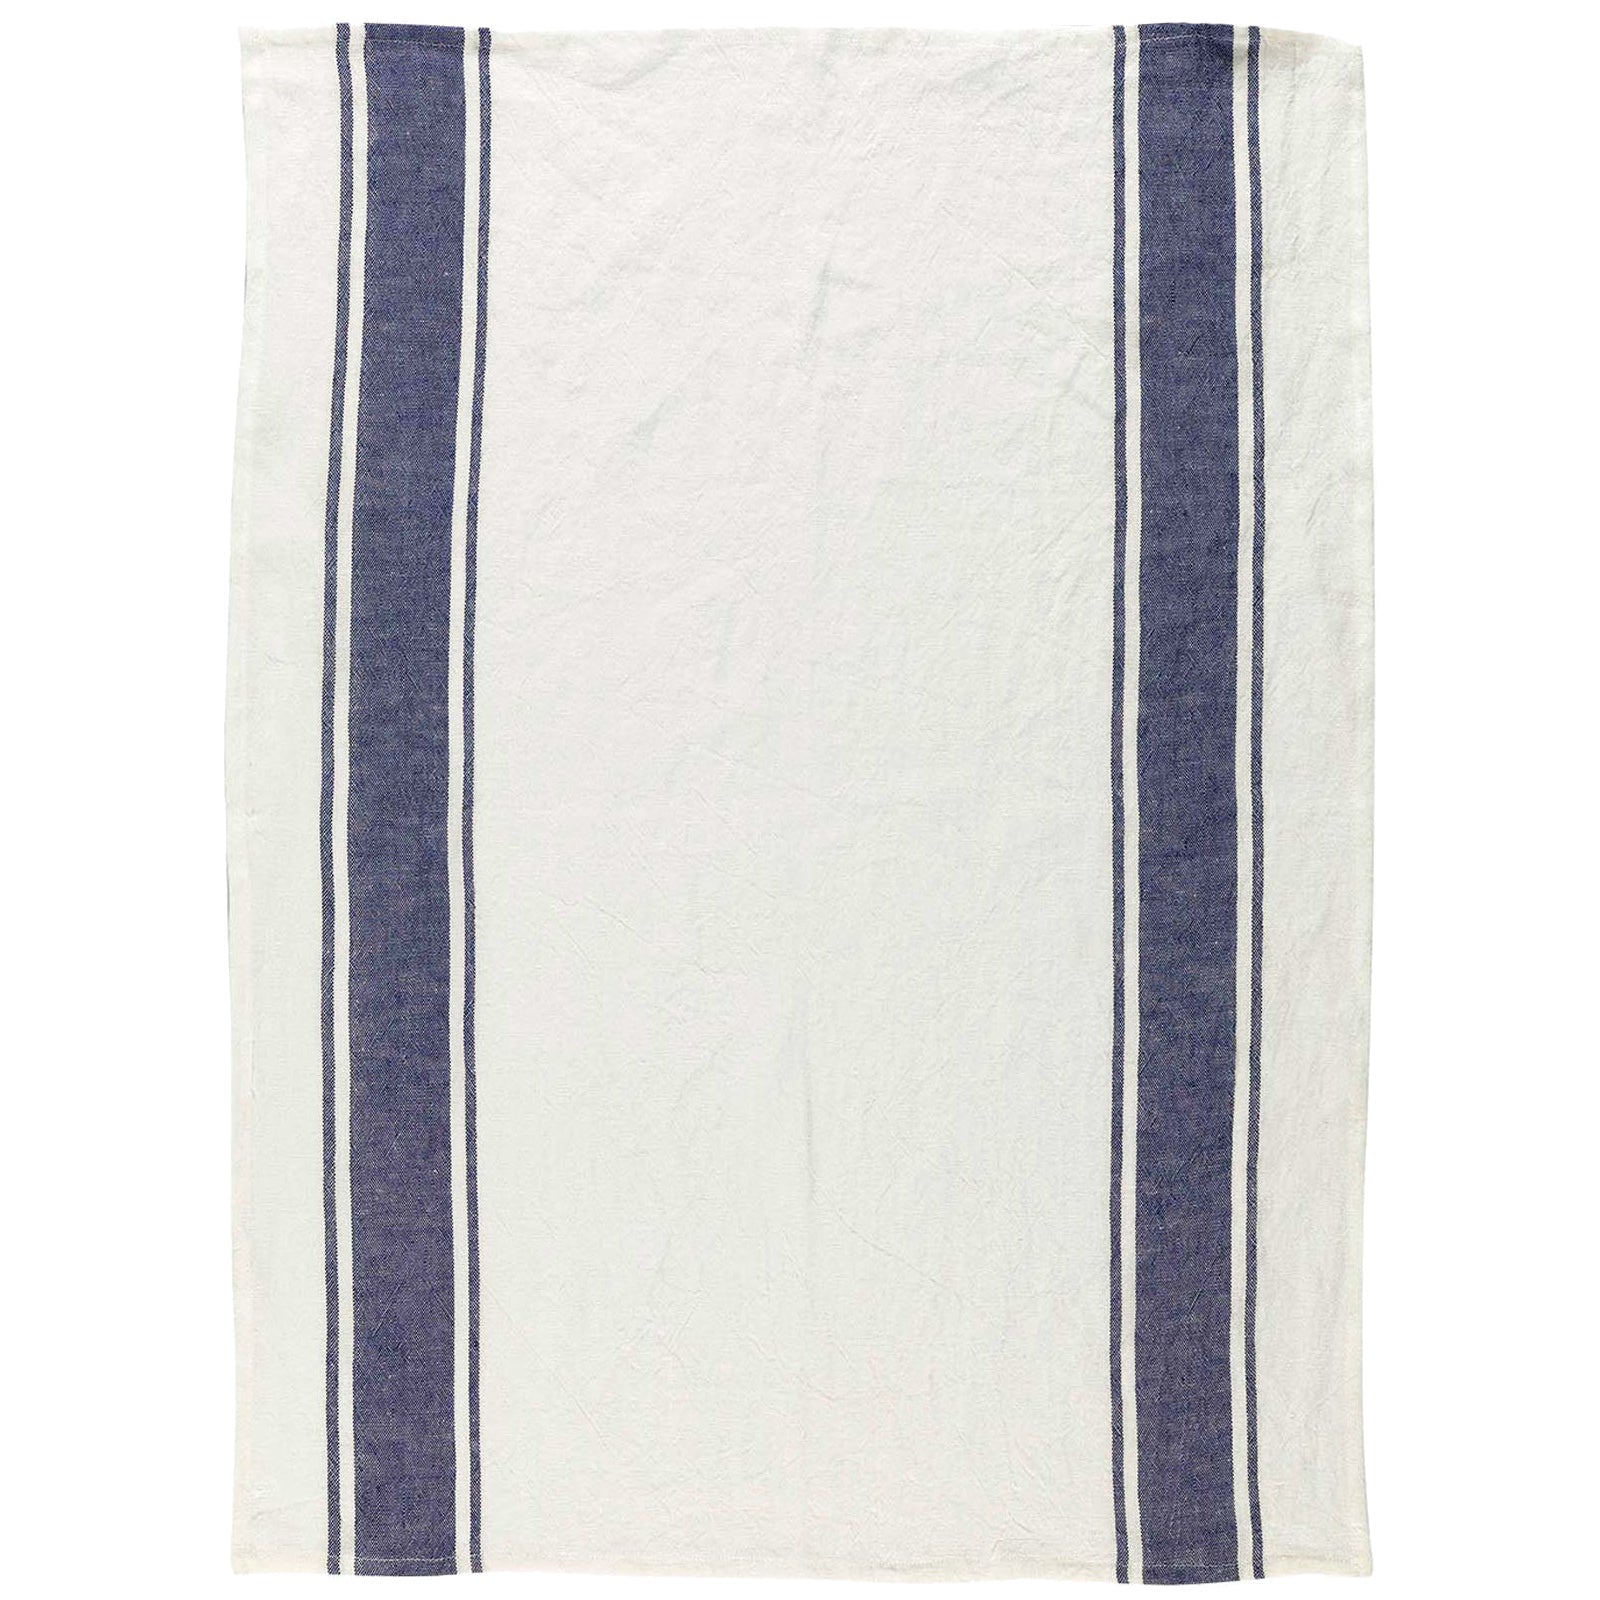 SNOWPOP BLUE Linen Kitchen Towels - Exclusive Designs Tea Towels